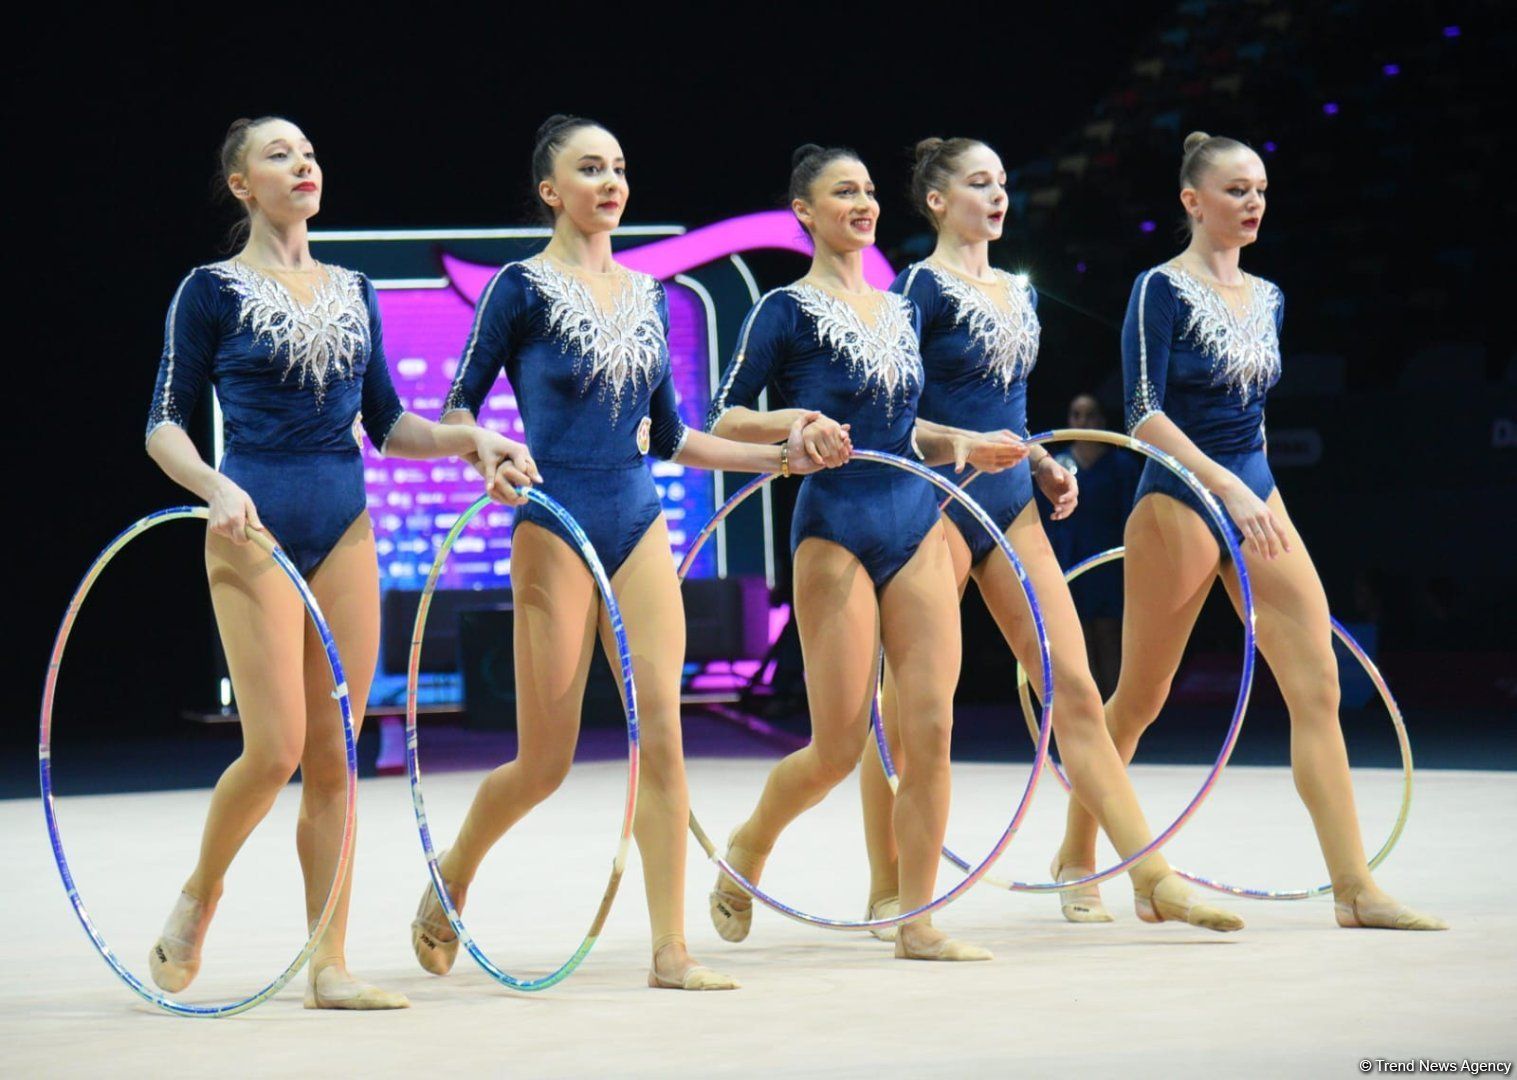 National team reaches finals of European Rhythmic Gymnastics Championships